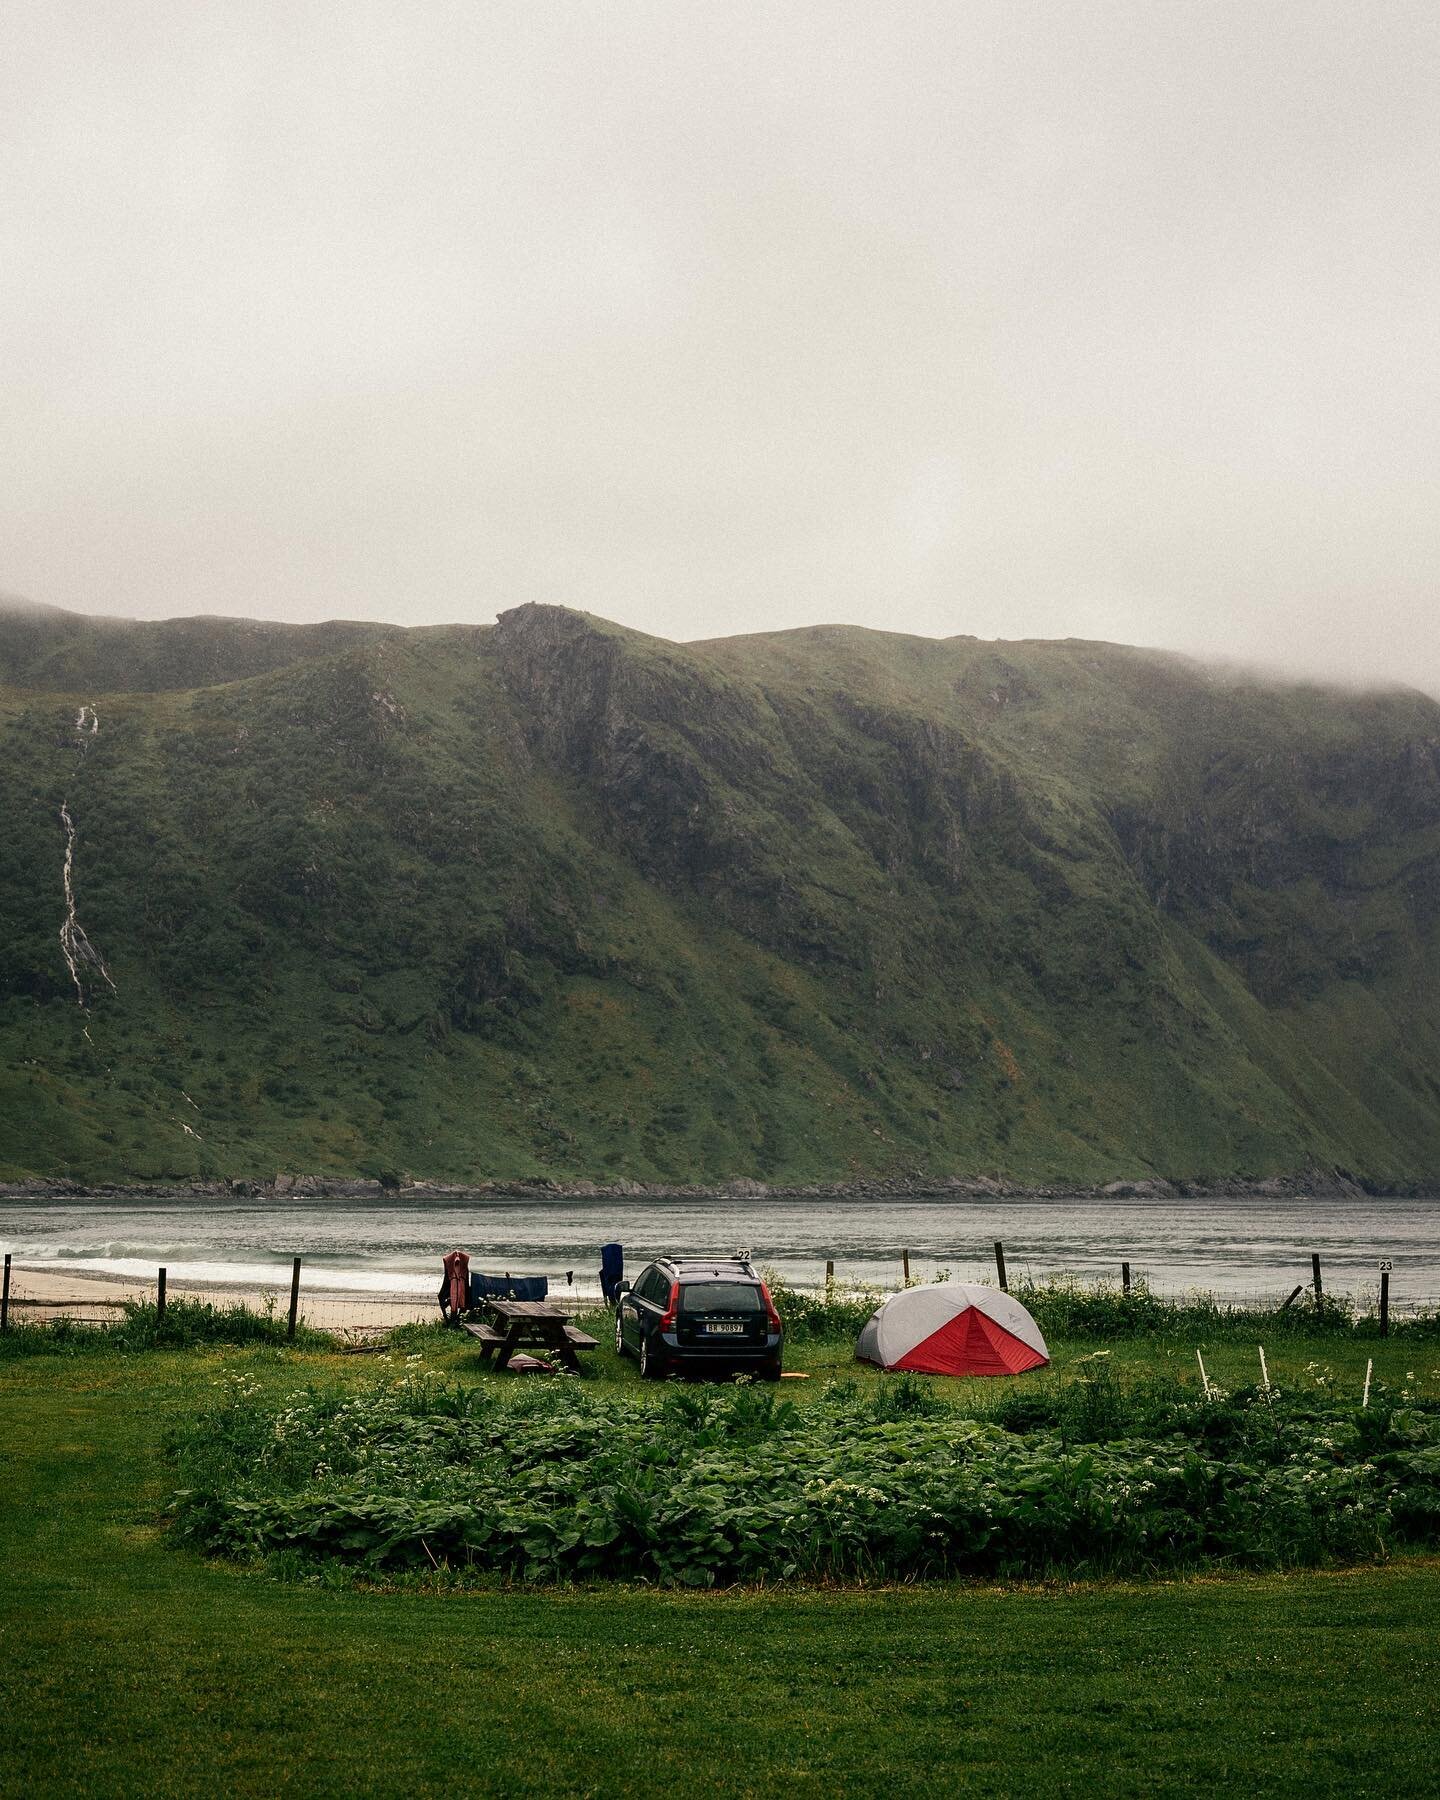 Hoddevik-trip summary: narrow roads, lush mountains and lots of sheep 🐑